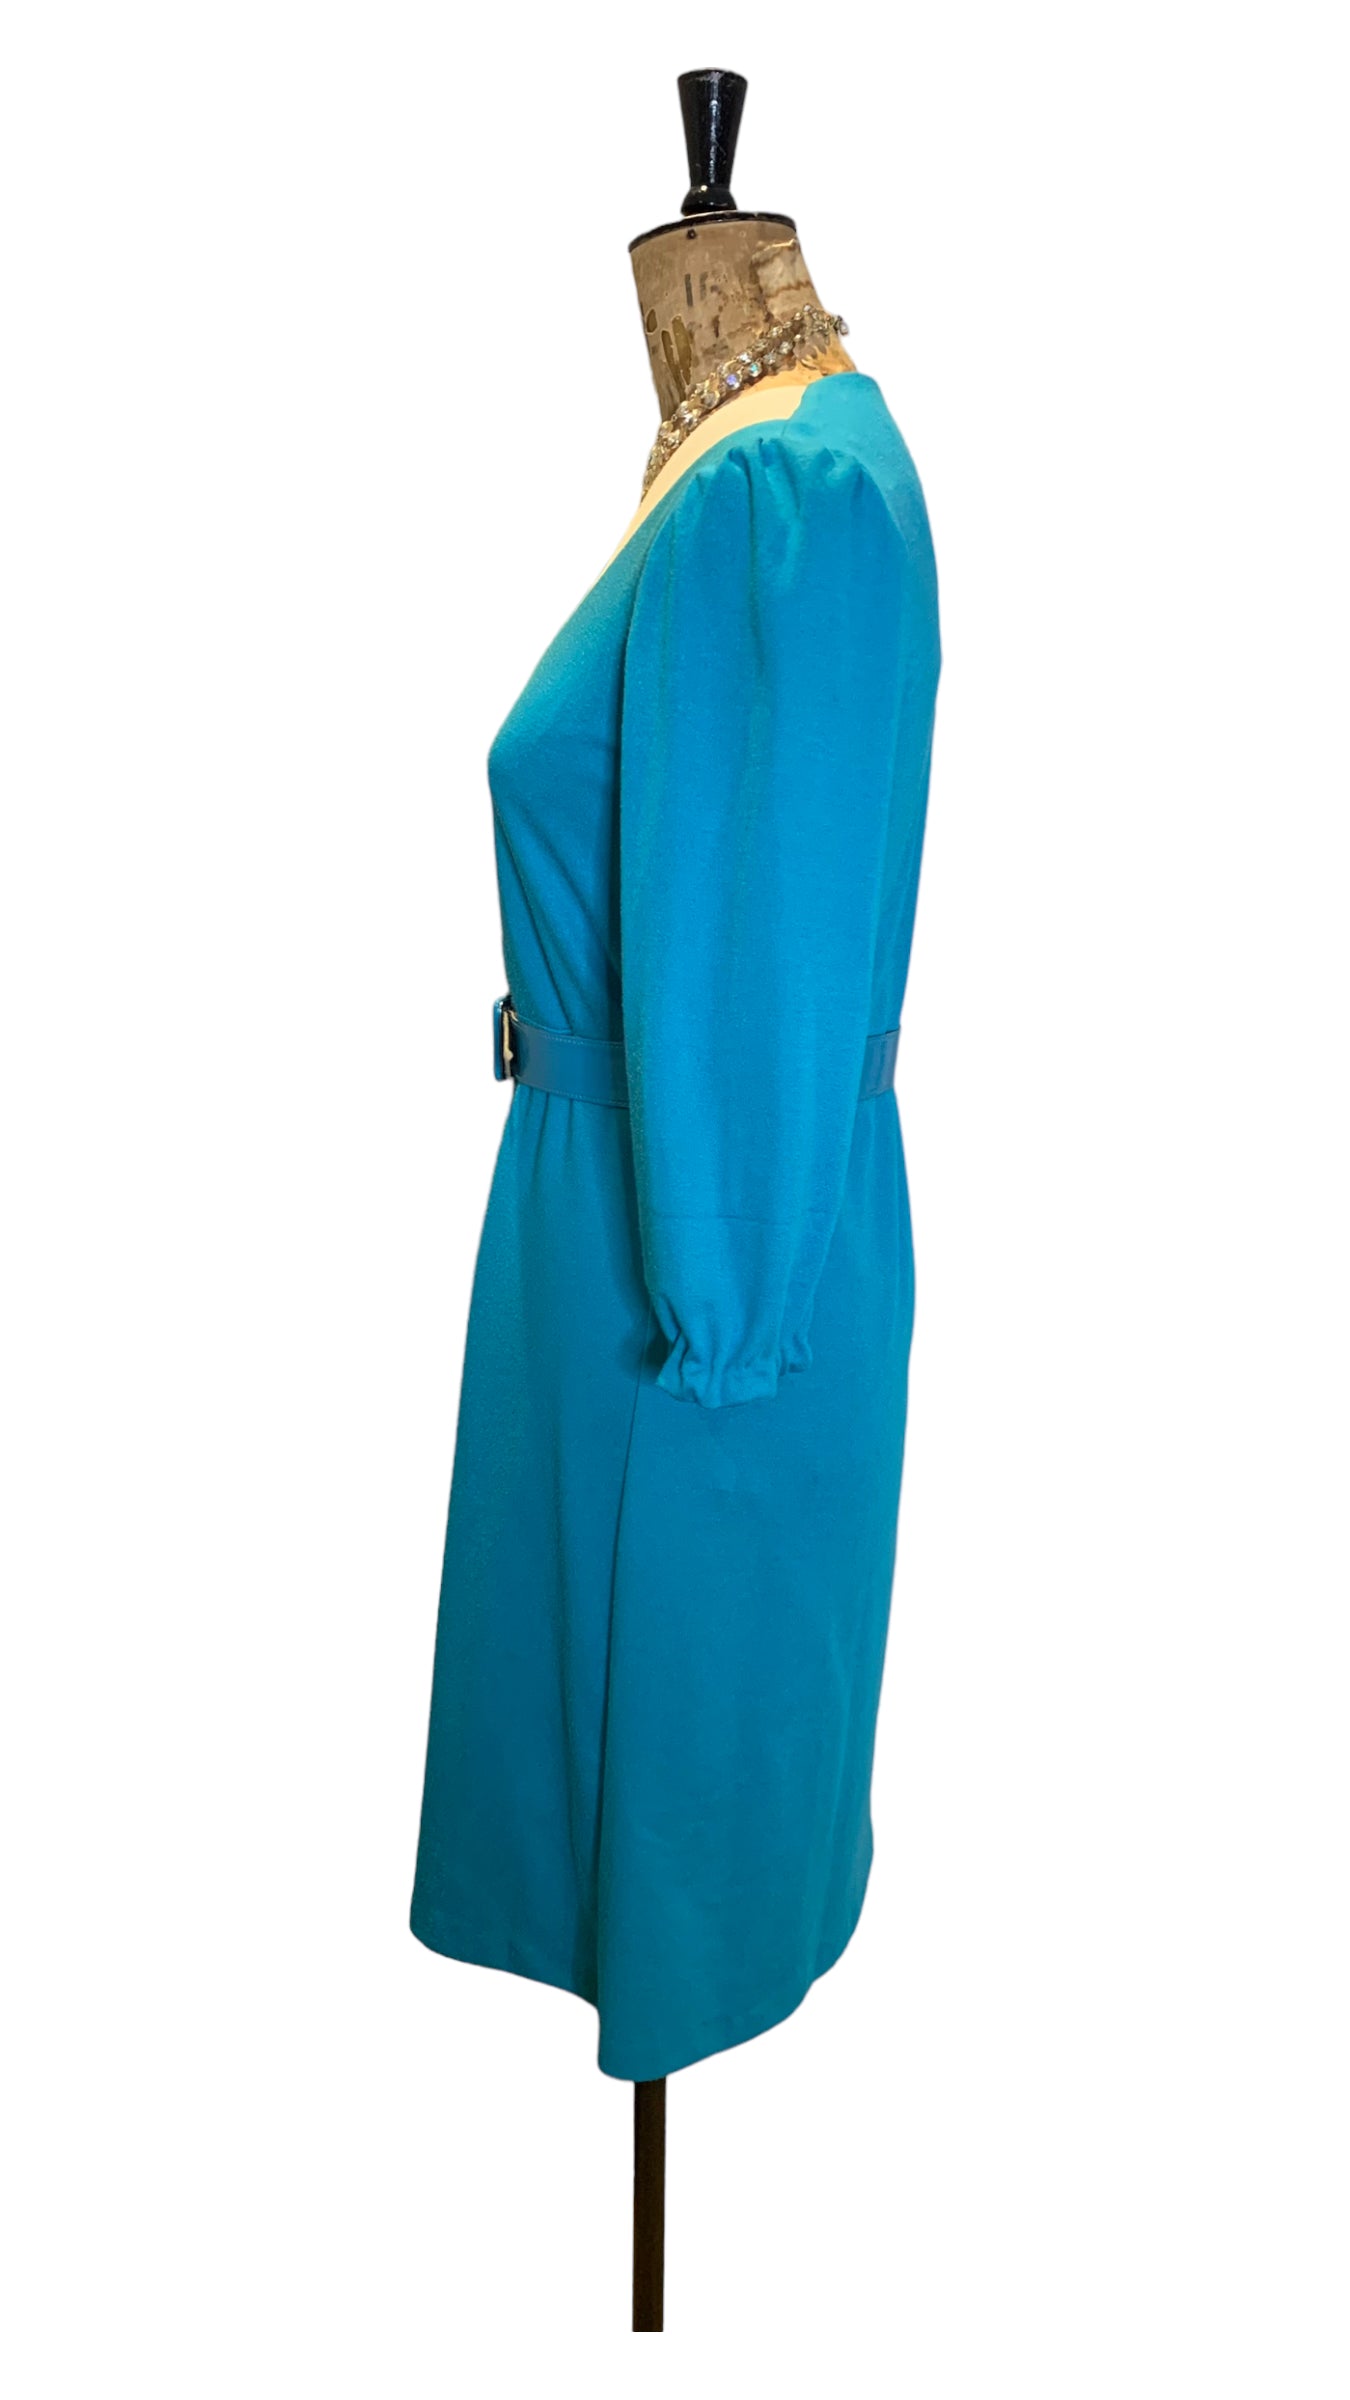 70s Vintage Torquoise  Cotton Dress Size Uk 10 -12